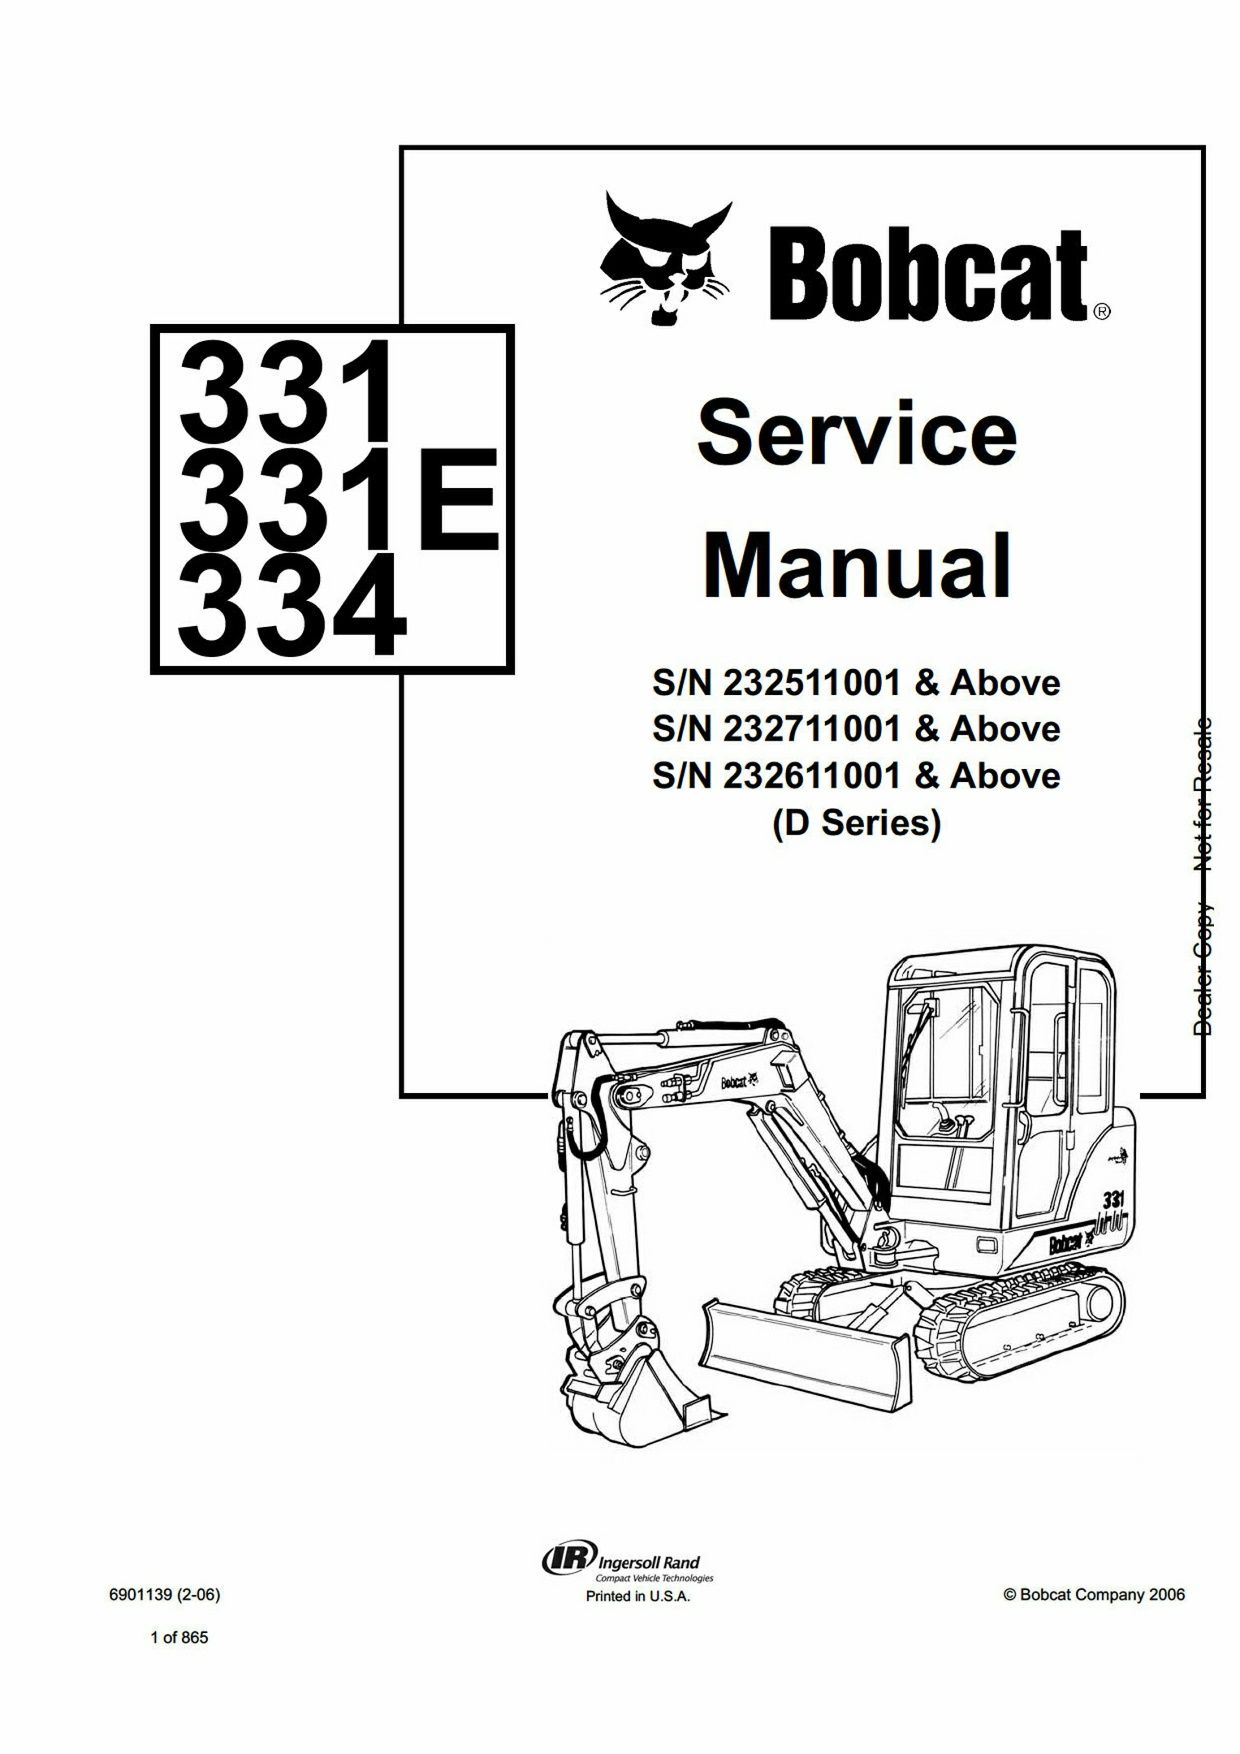 bobcat 331 service manual download